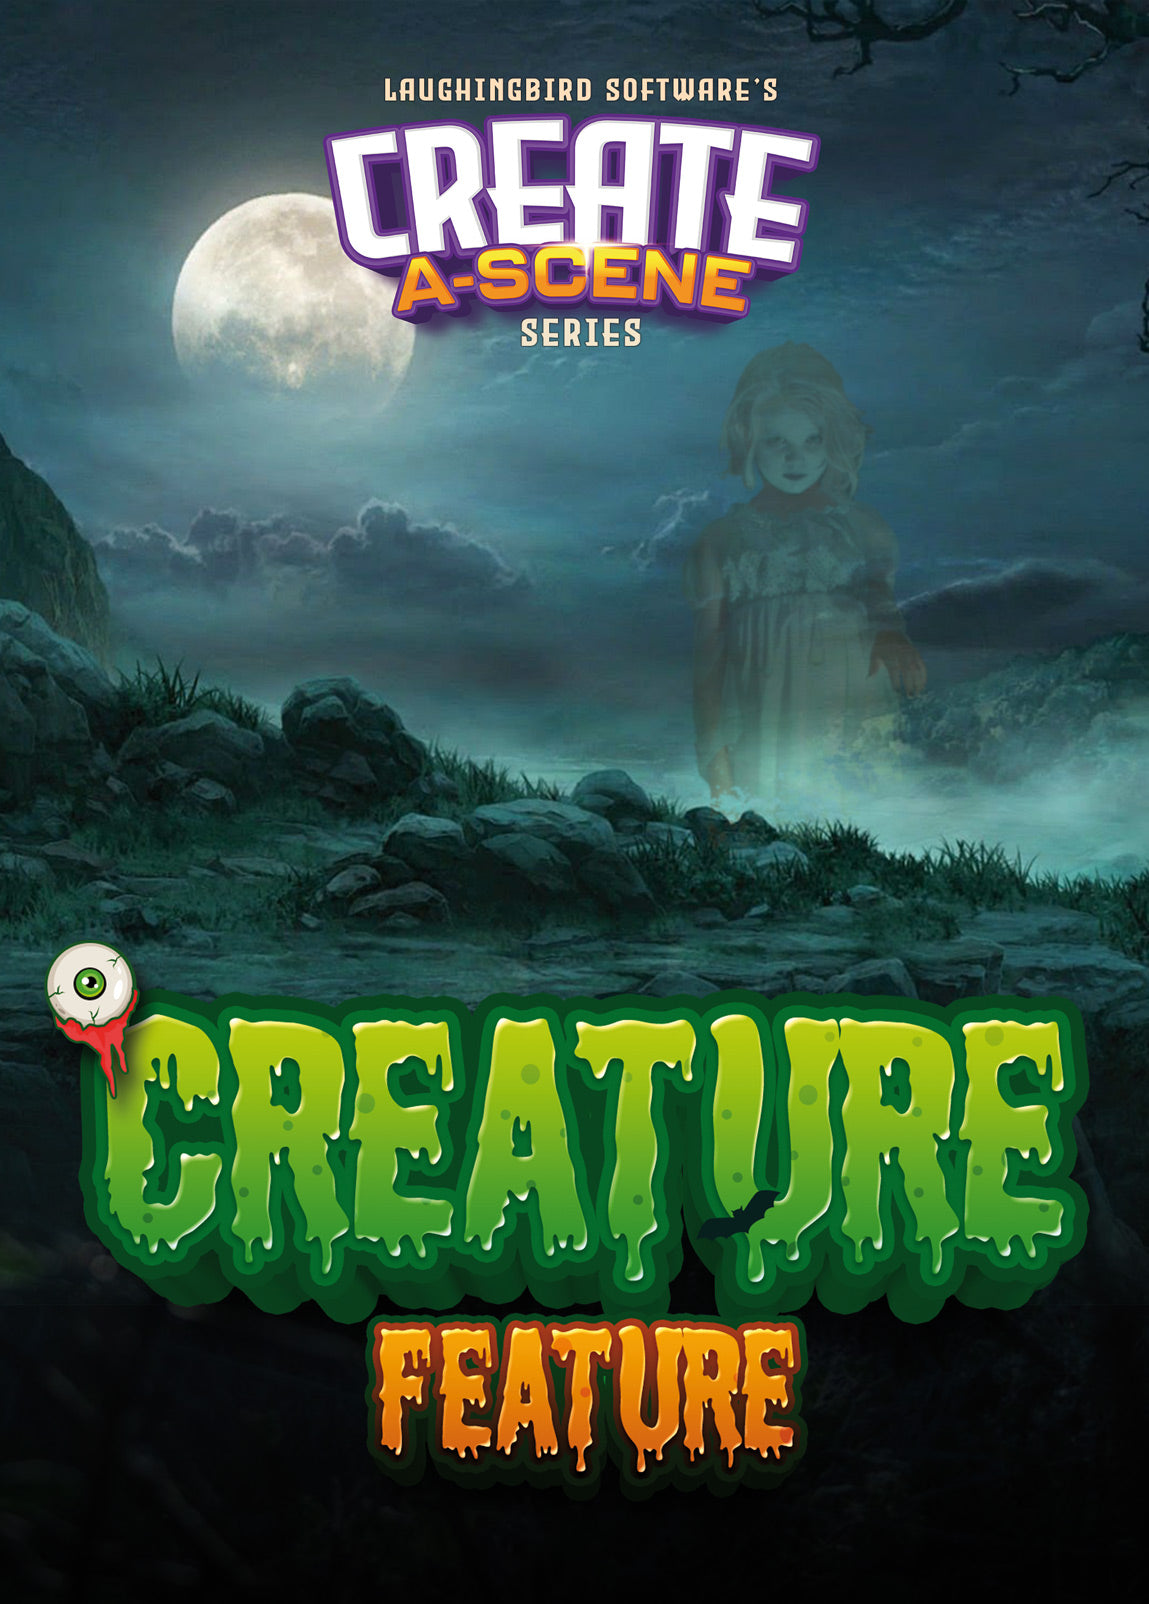 Create-A-Scene Creature Feature